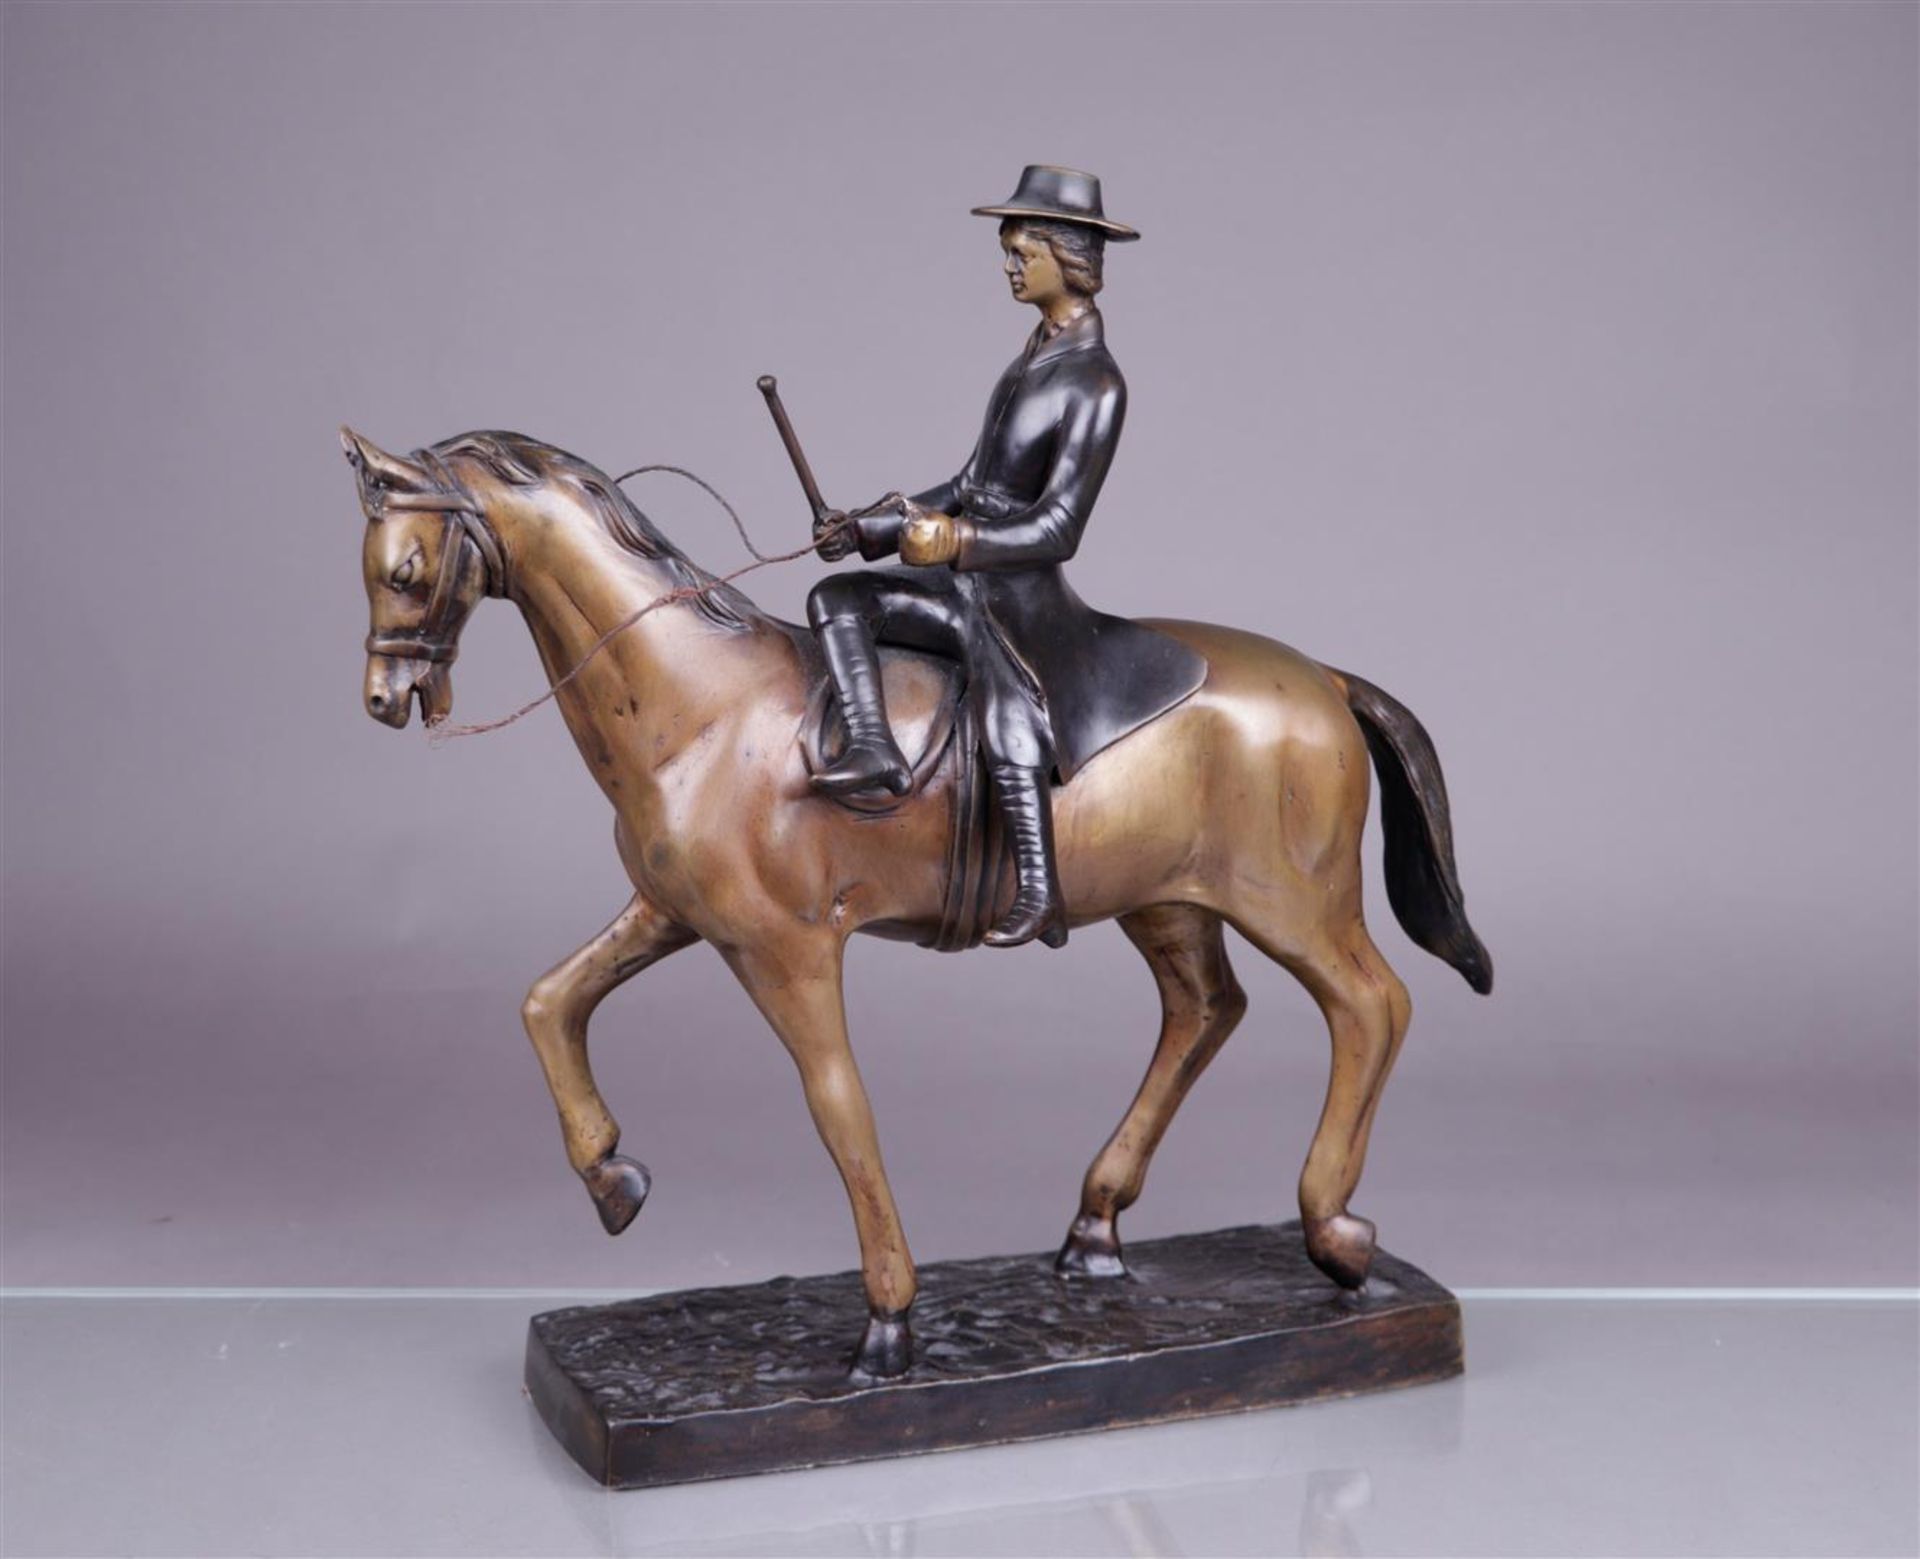 A bronze of an amazon on horseback, 20th century.
H.: 45 cm.